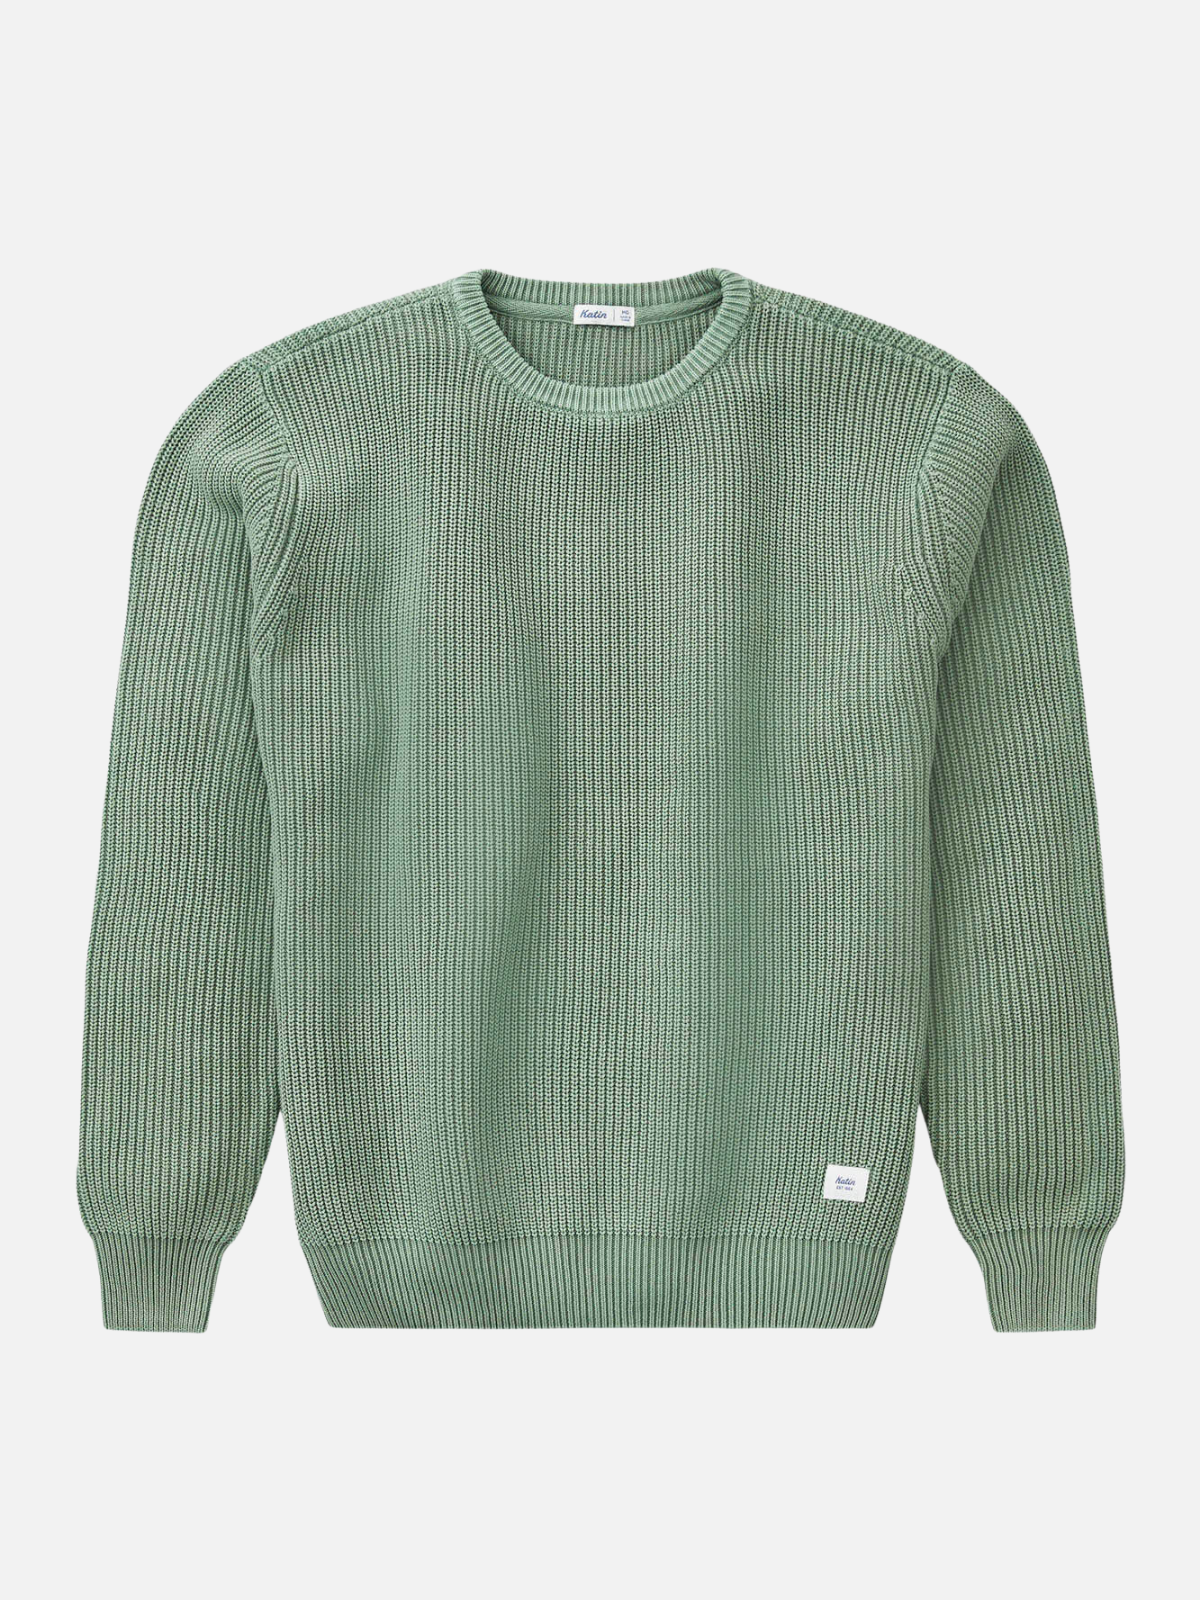 katin swell sweater hedge pale green 100% cotton shaker stitch crewneck kempt athens ga georgia men's clothing store downtown lumpkin street